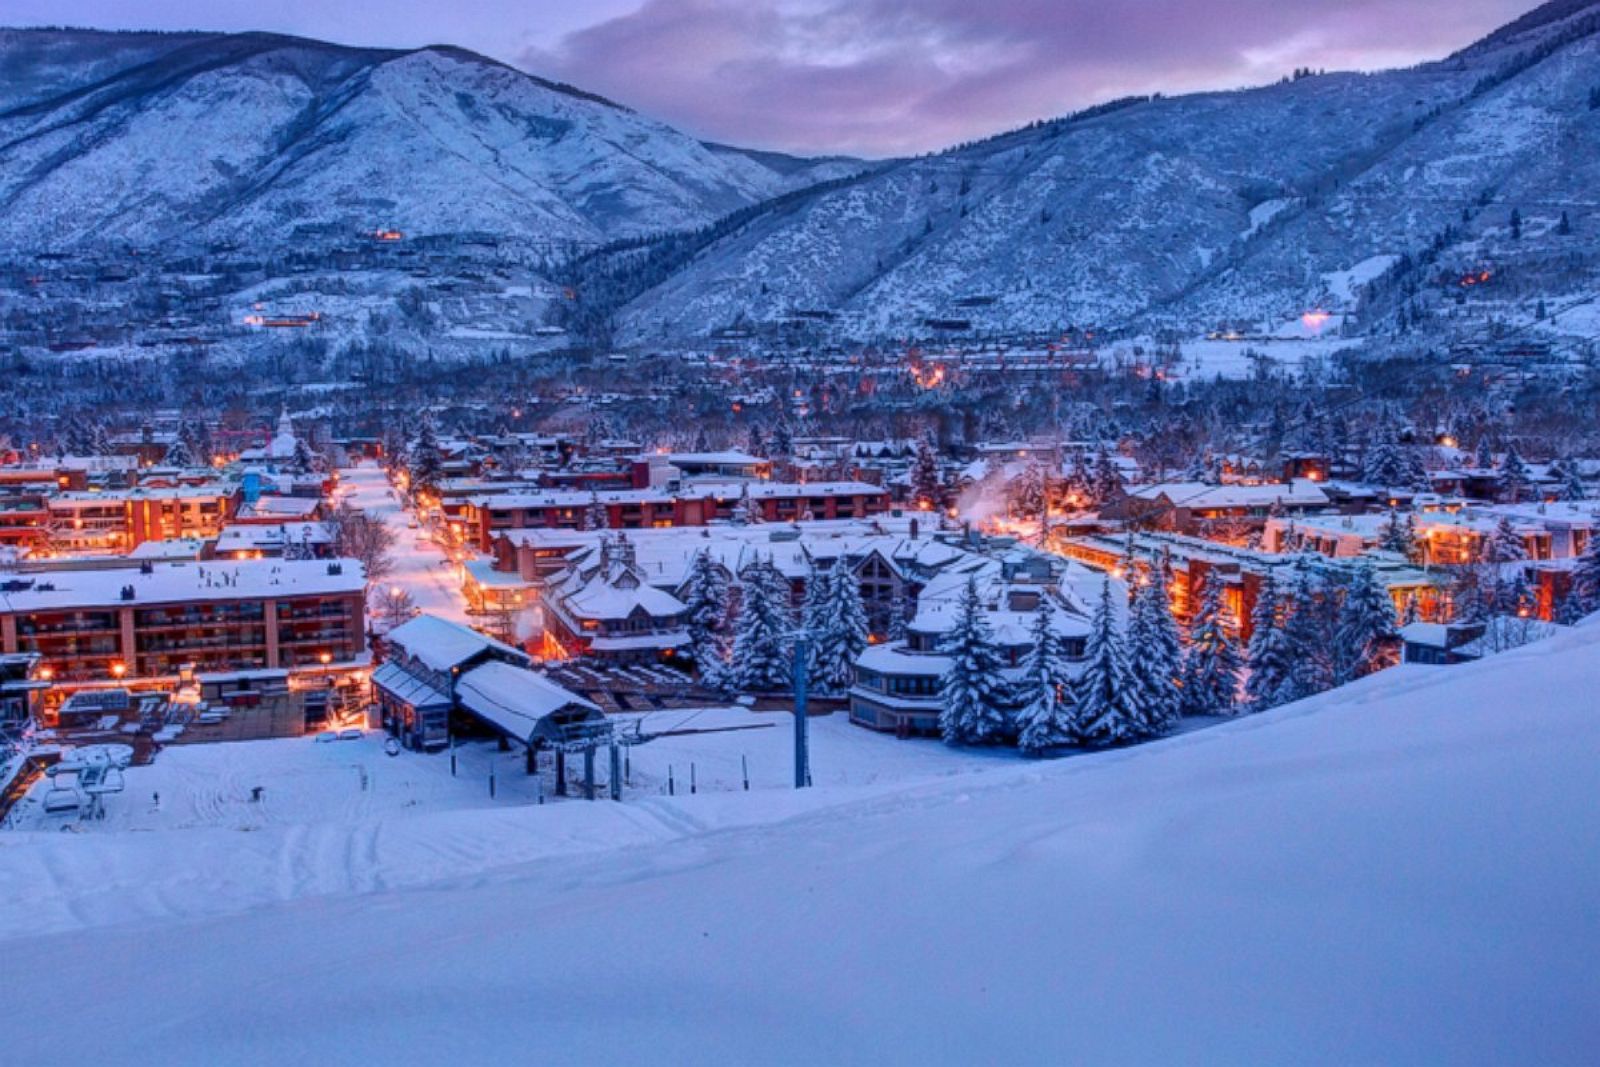 Aspen/Snowmass Ski Resort Picture Best Ski Resorts for Families ABC